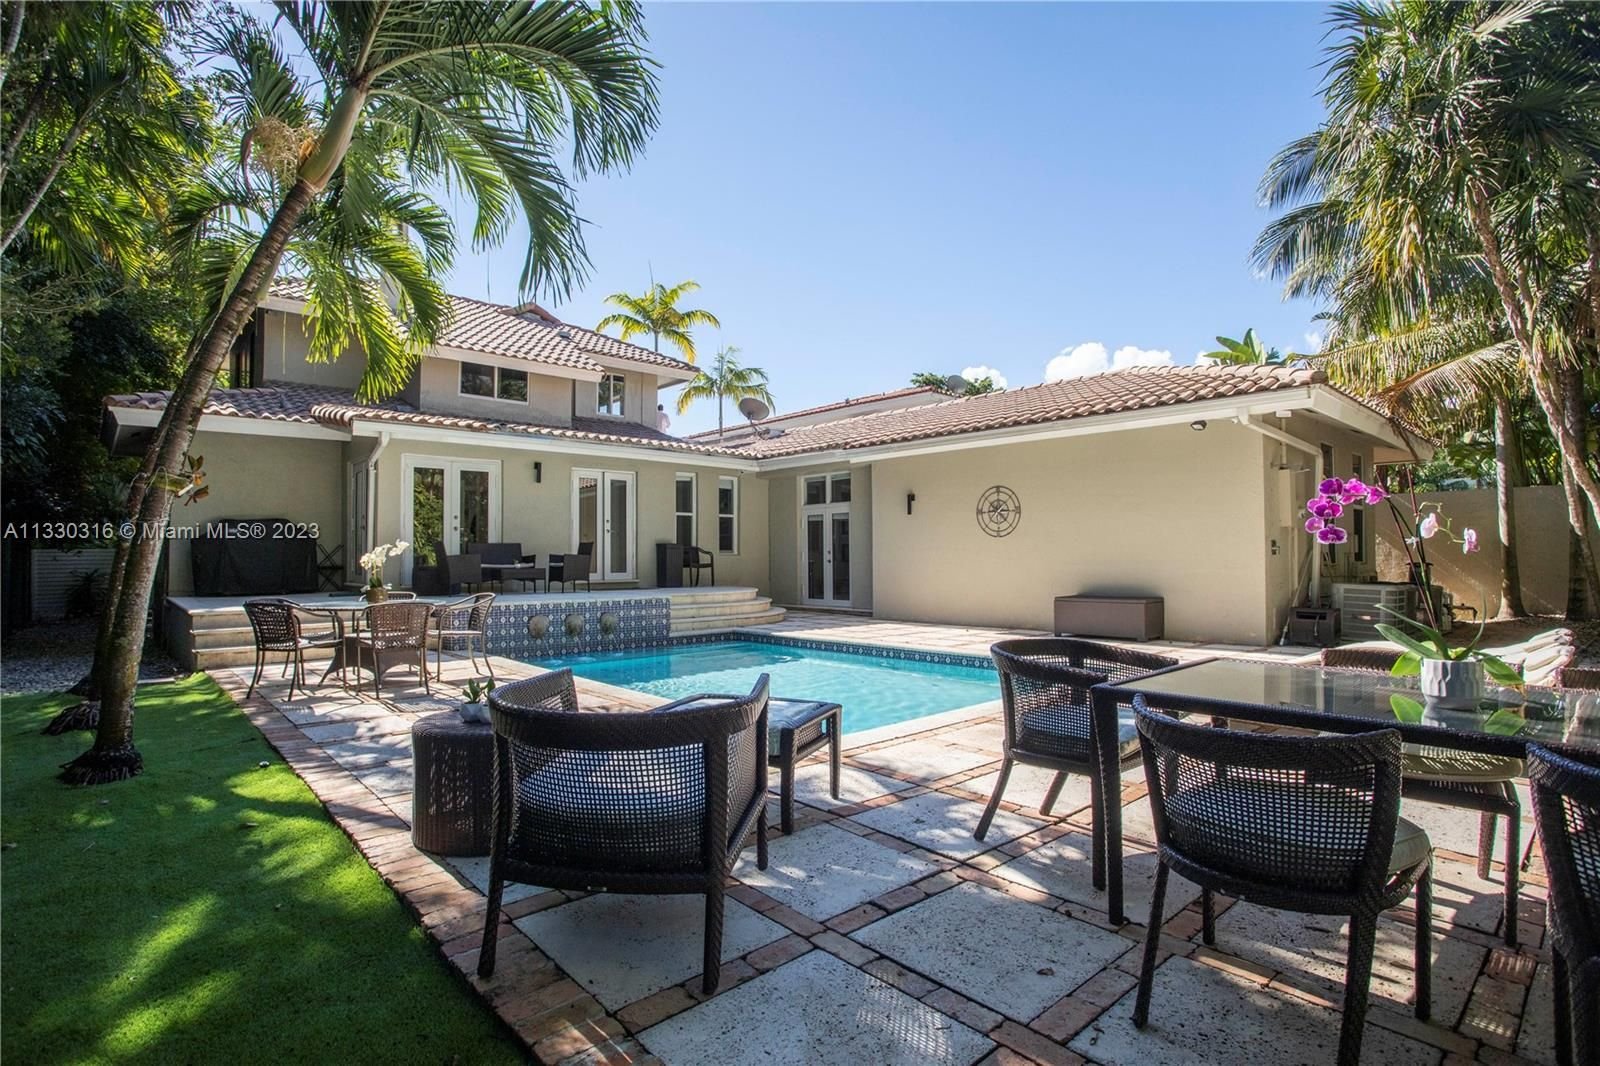 Real estate property located at 3971 Poinciana Closed Rd, Miami-Dade County, Miami, FL